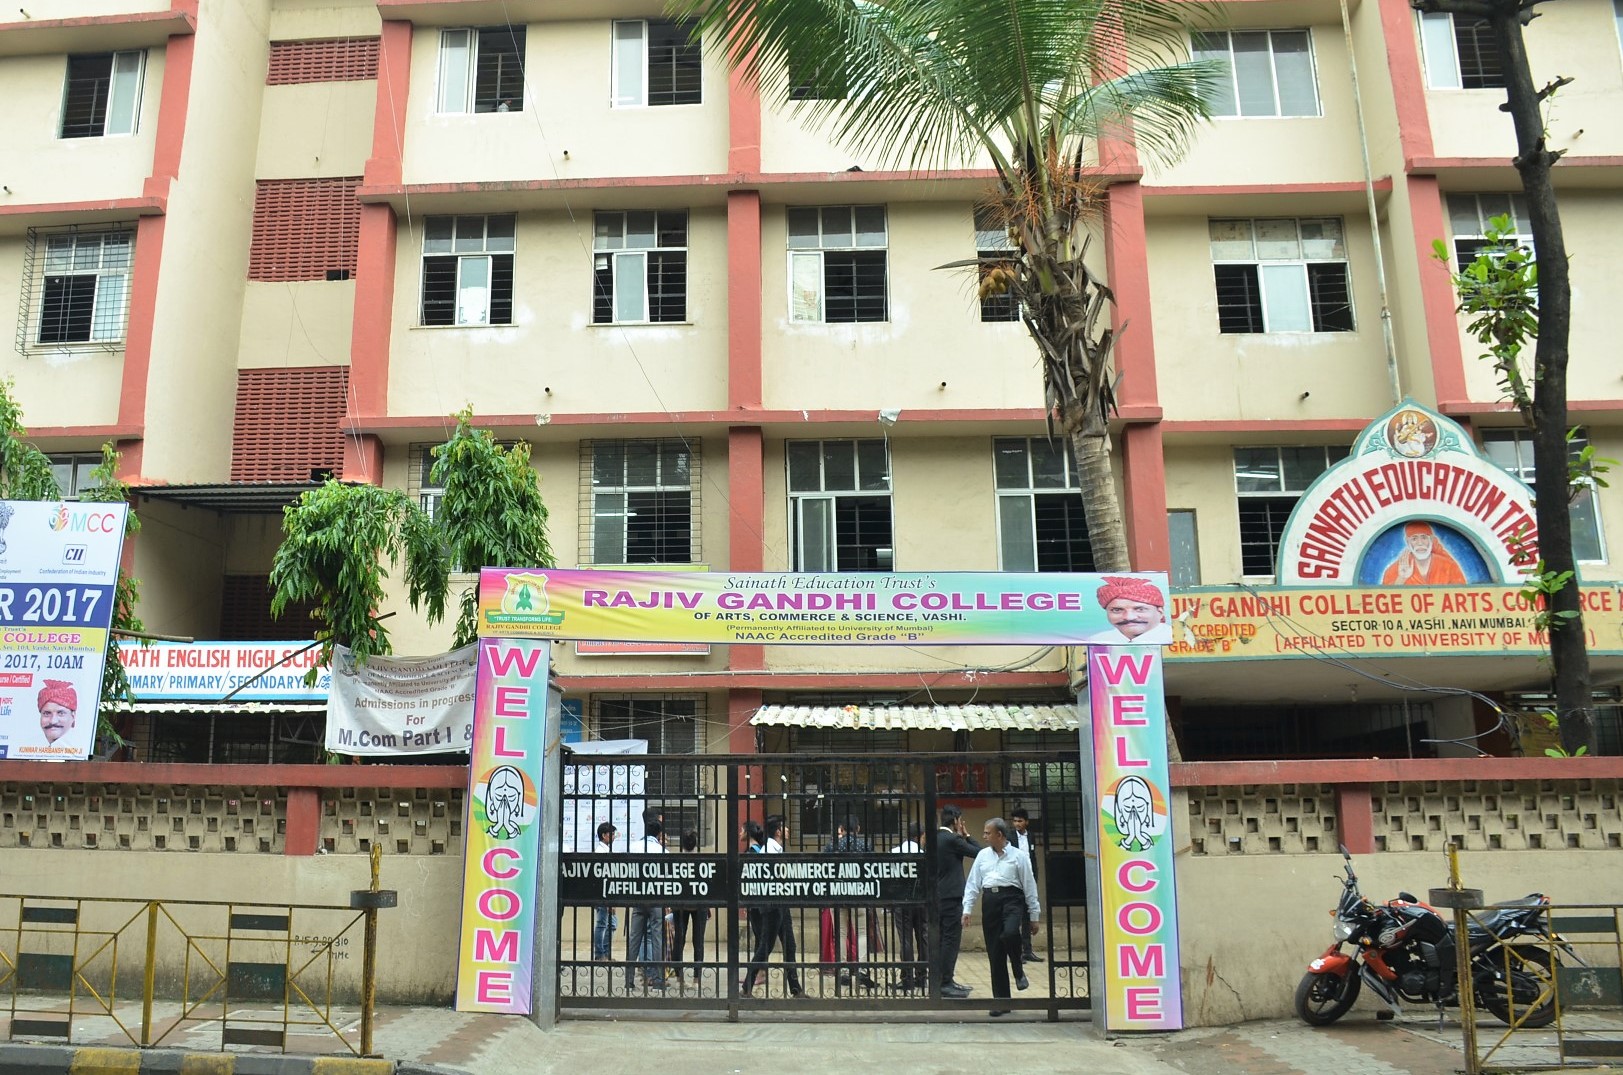 Rajiv Gandhi College of Arts, Commerce and Science, Navi Mumbai Image